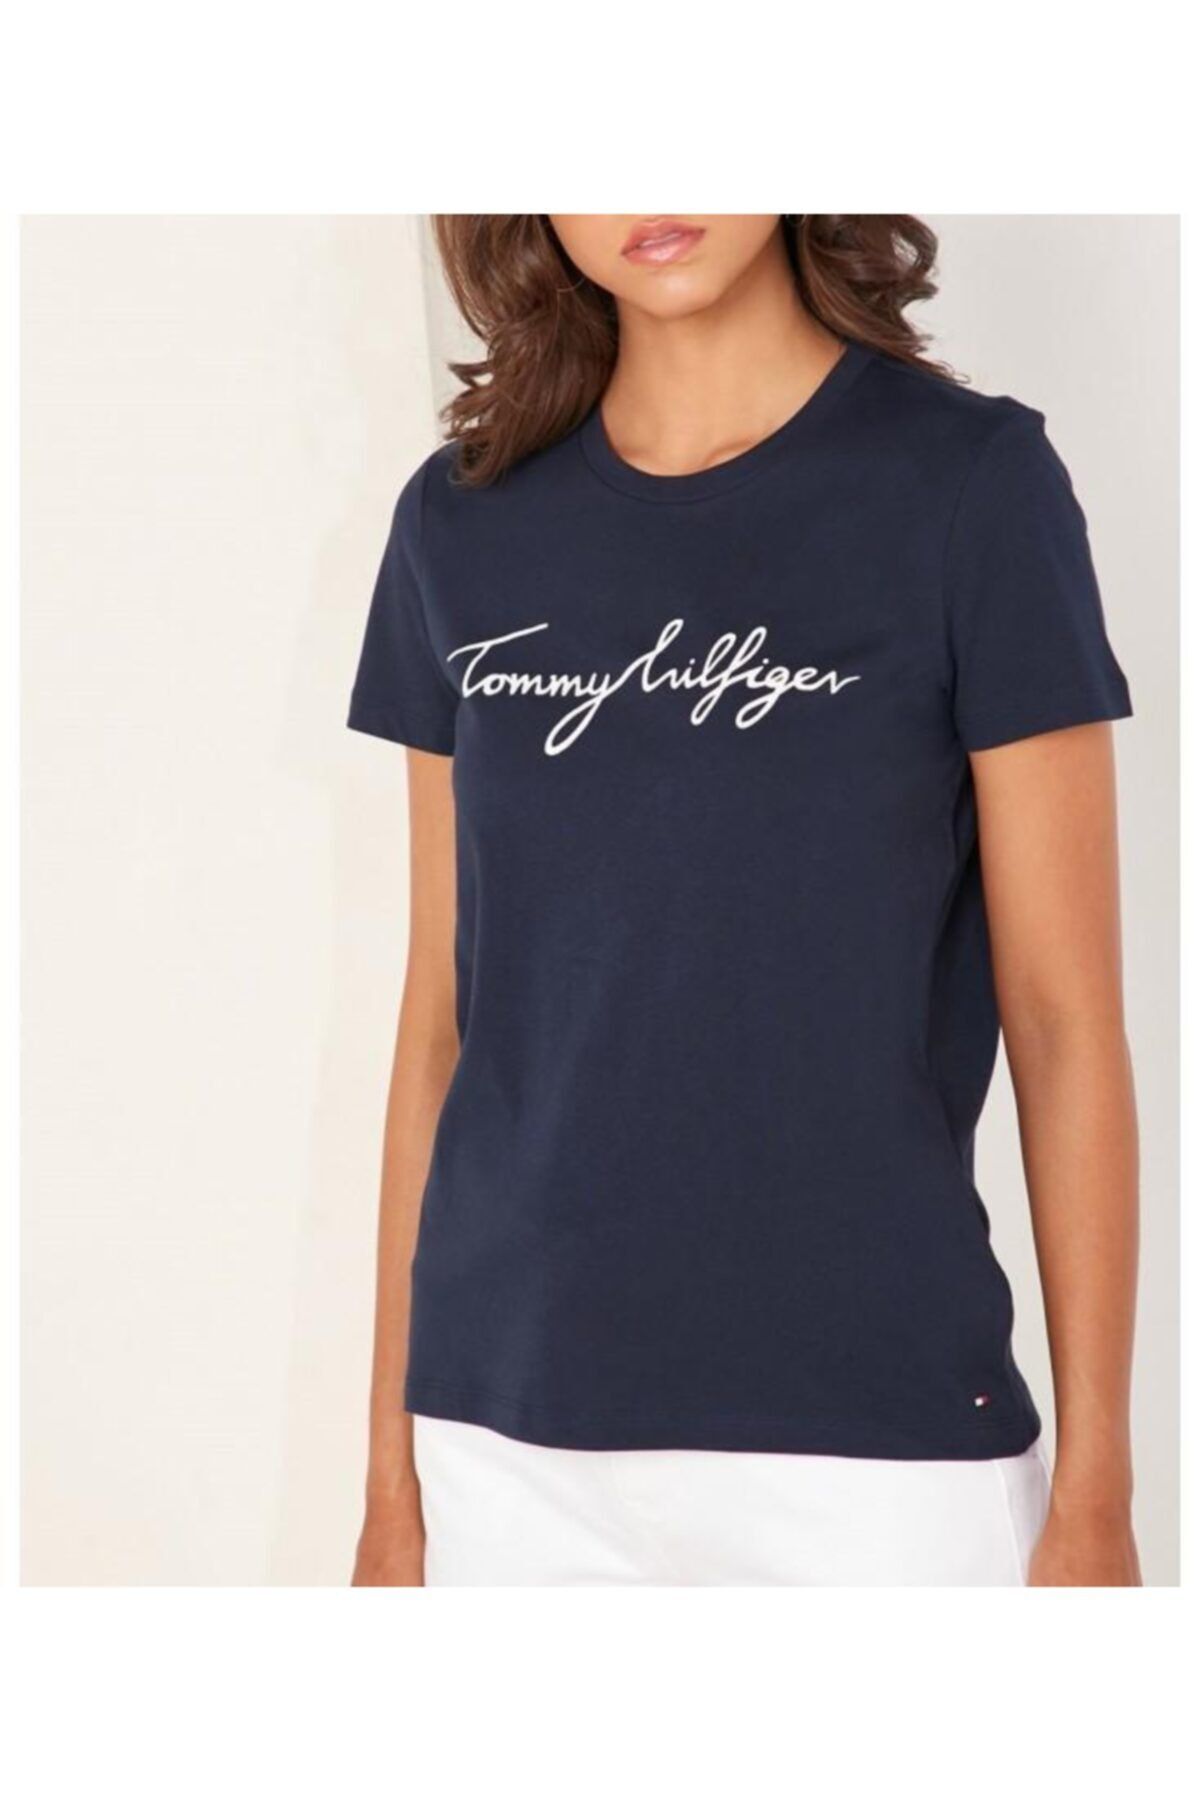 Tommy Hilfiger Kadın Lacivert T-shirt